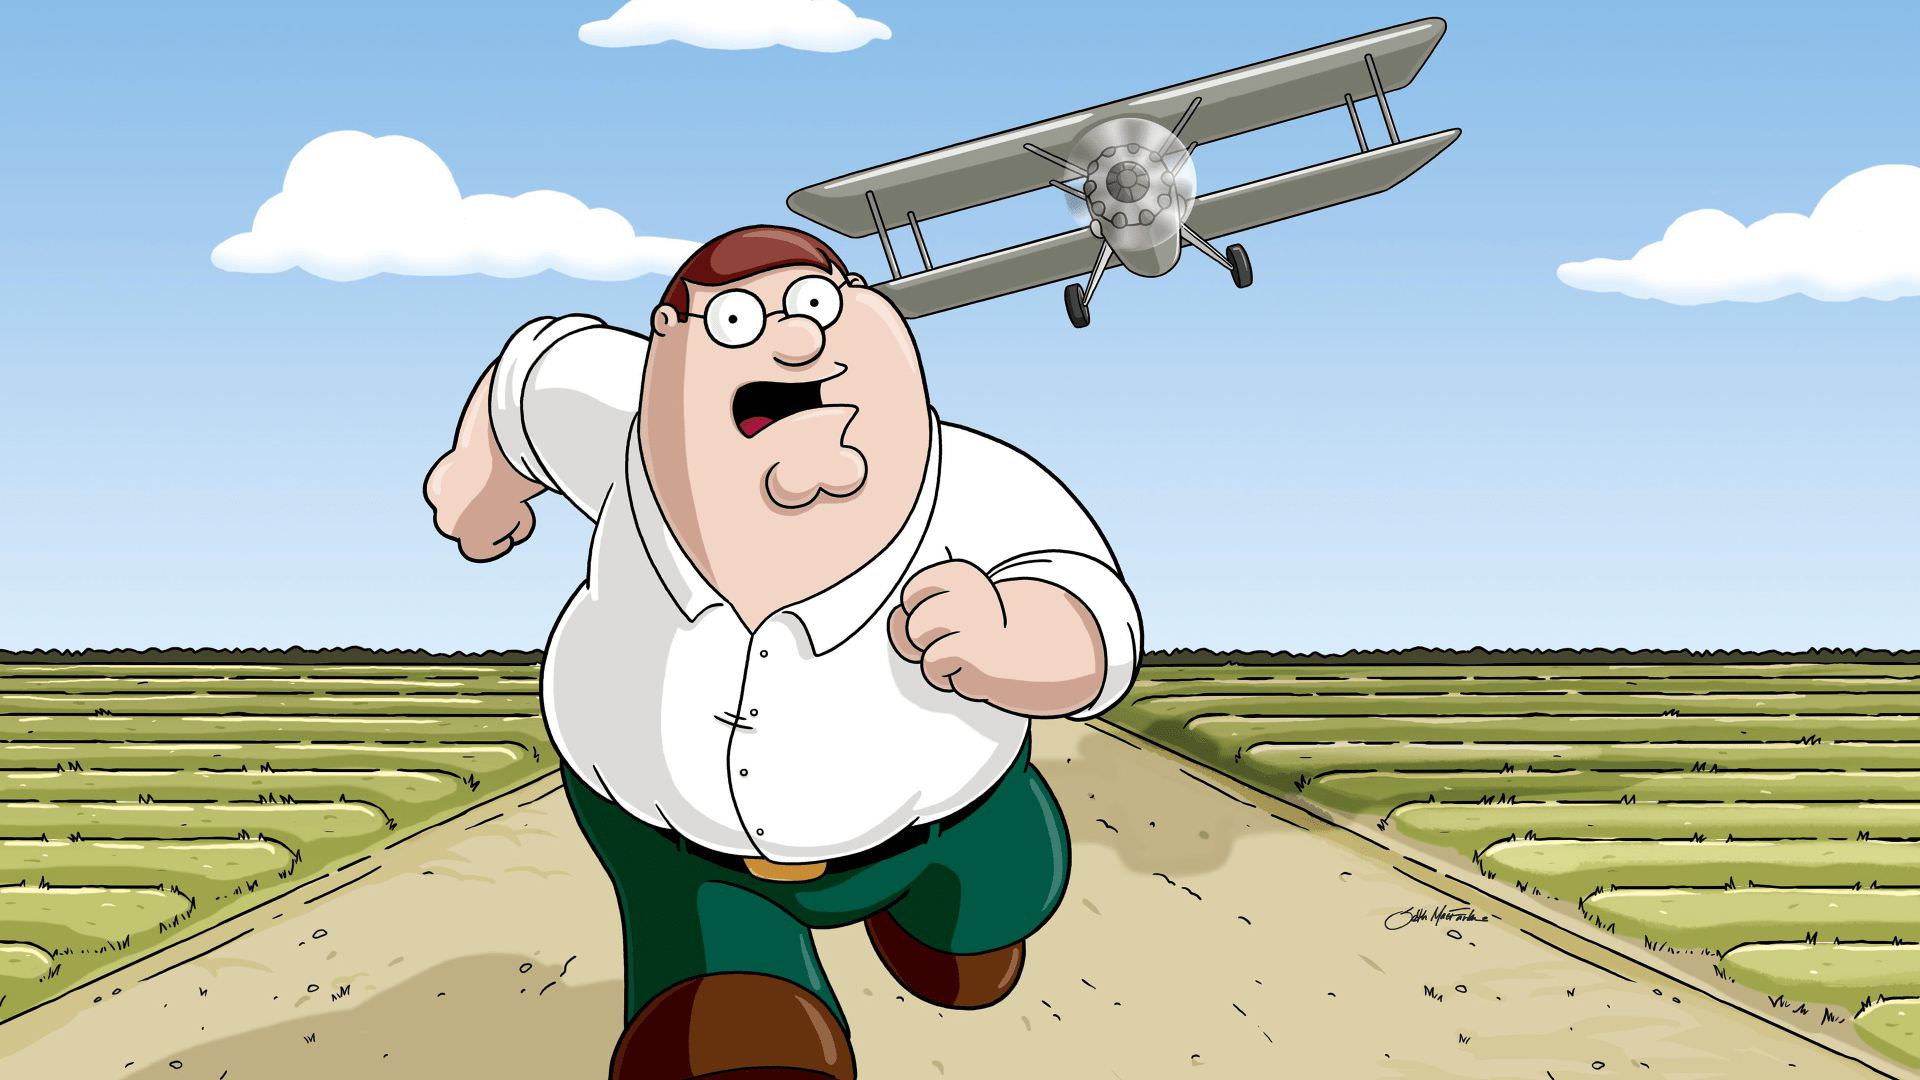 سریال Family Guy